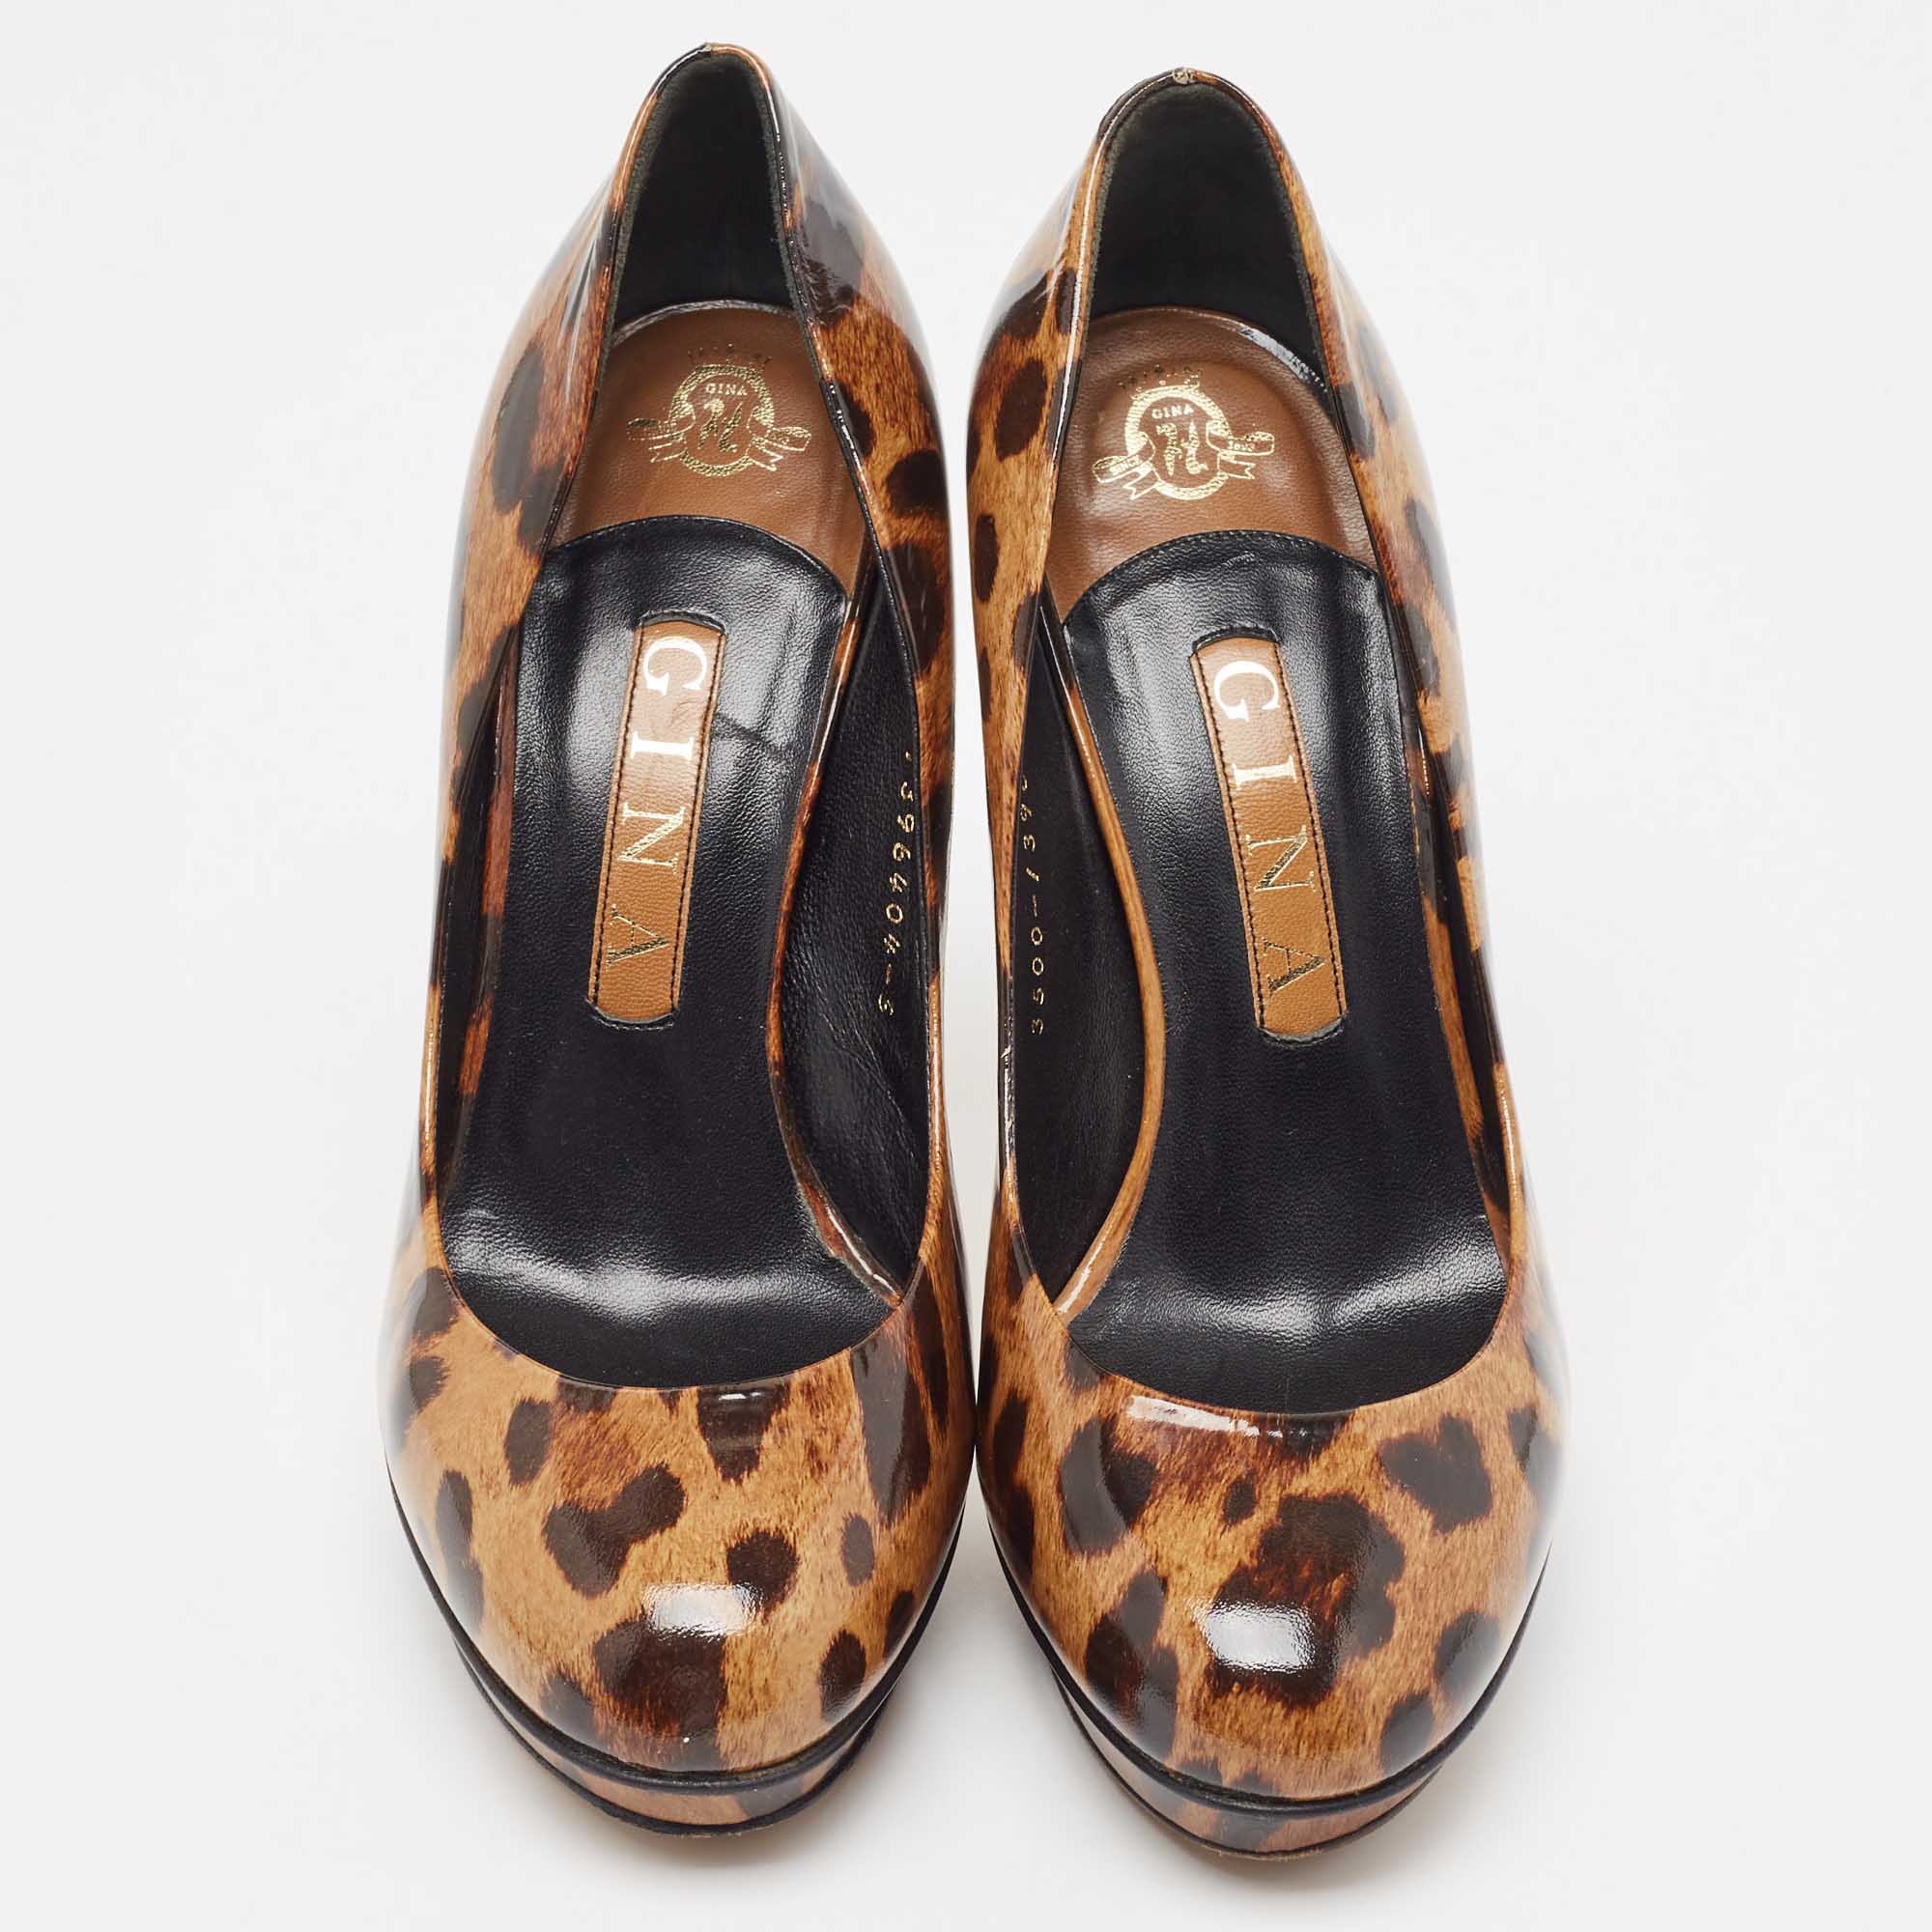 Gina Brown/Beige Leopard Print Patent Round Toe Pumps Size 38